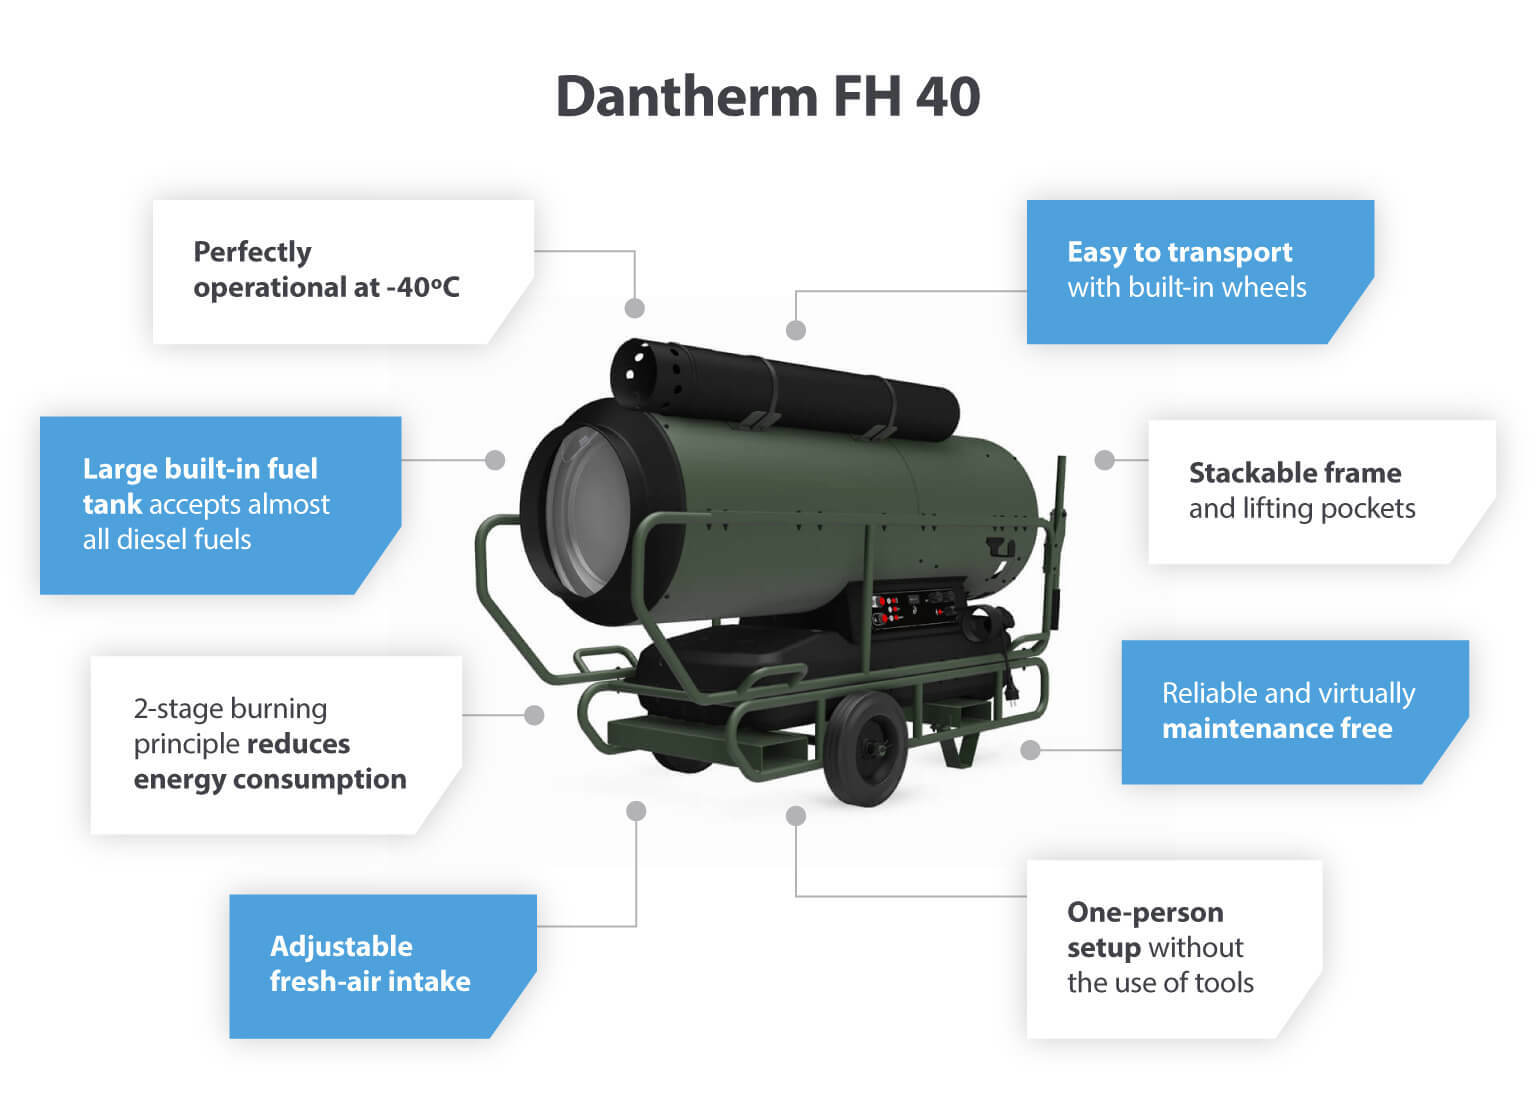 Dantherm FH 40